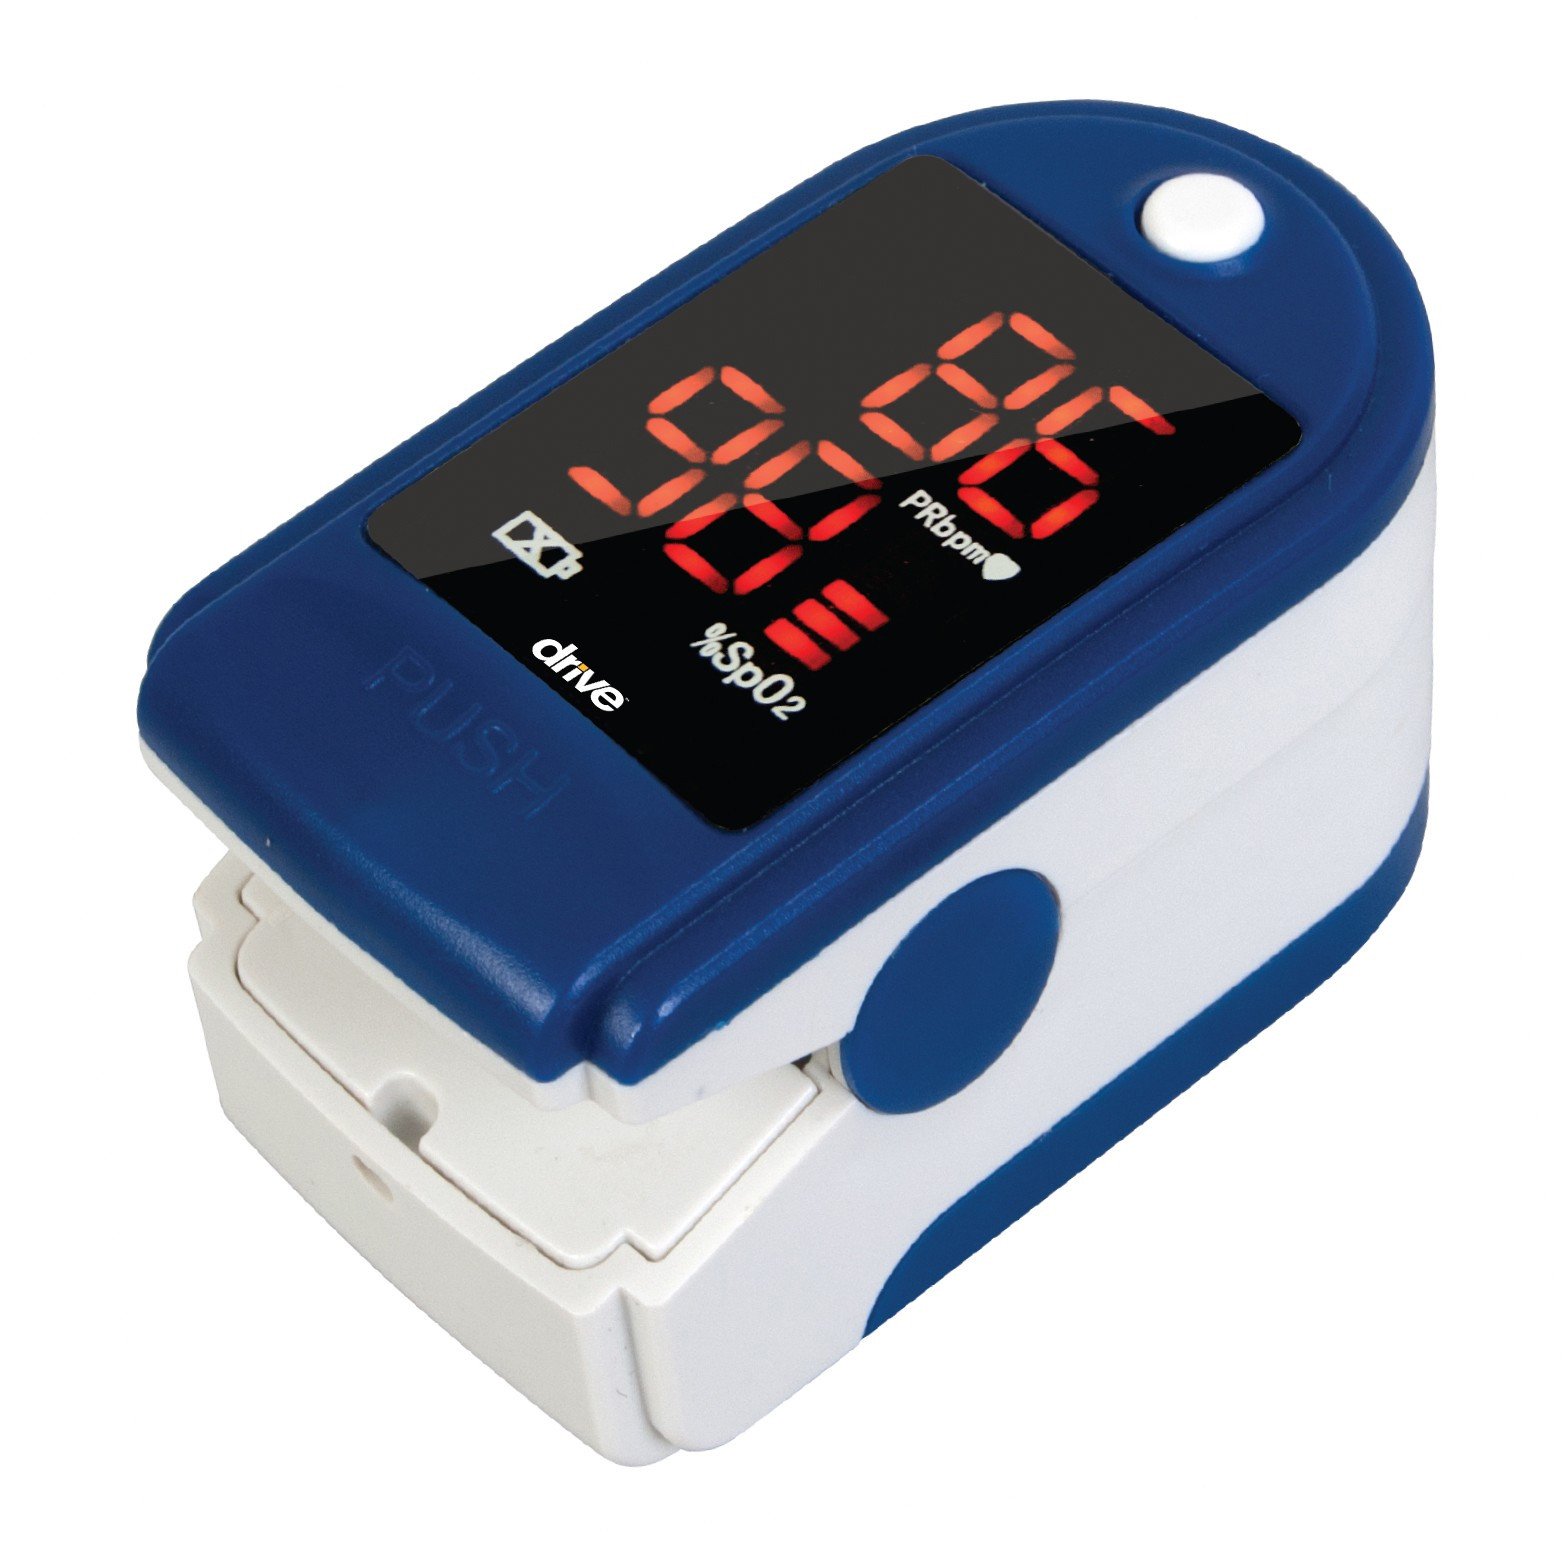 Health-Ox Fingertip Pulse Oximeter 